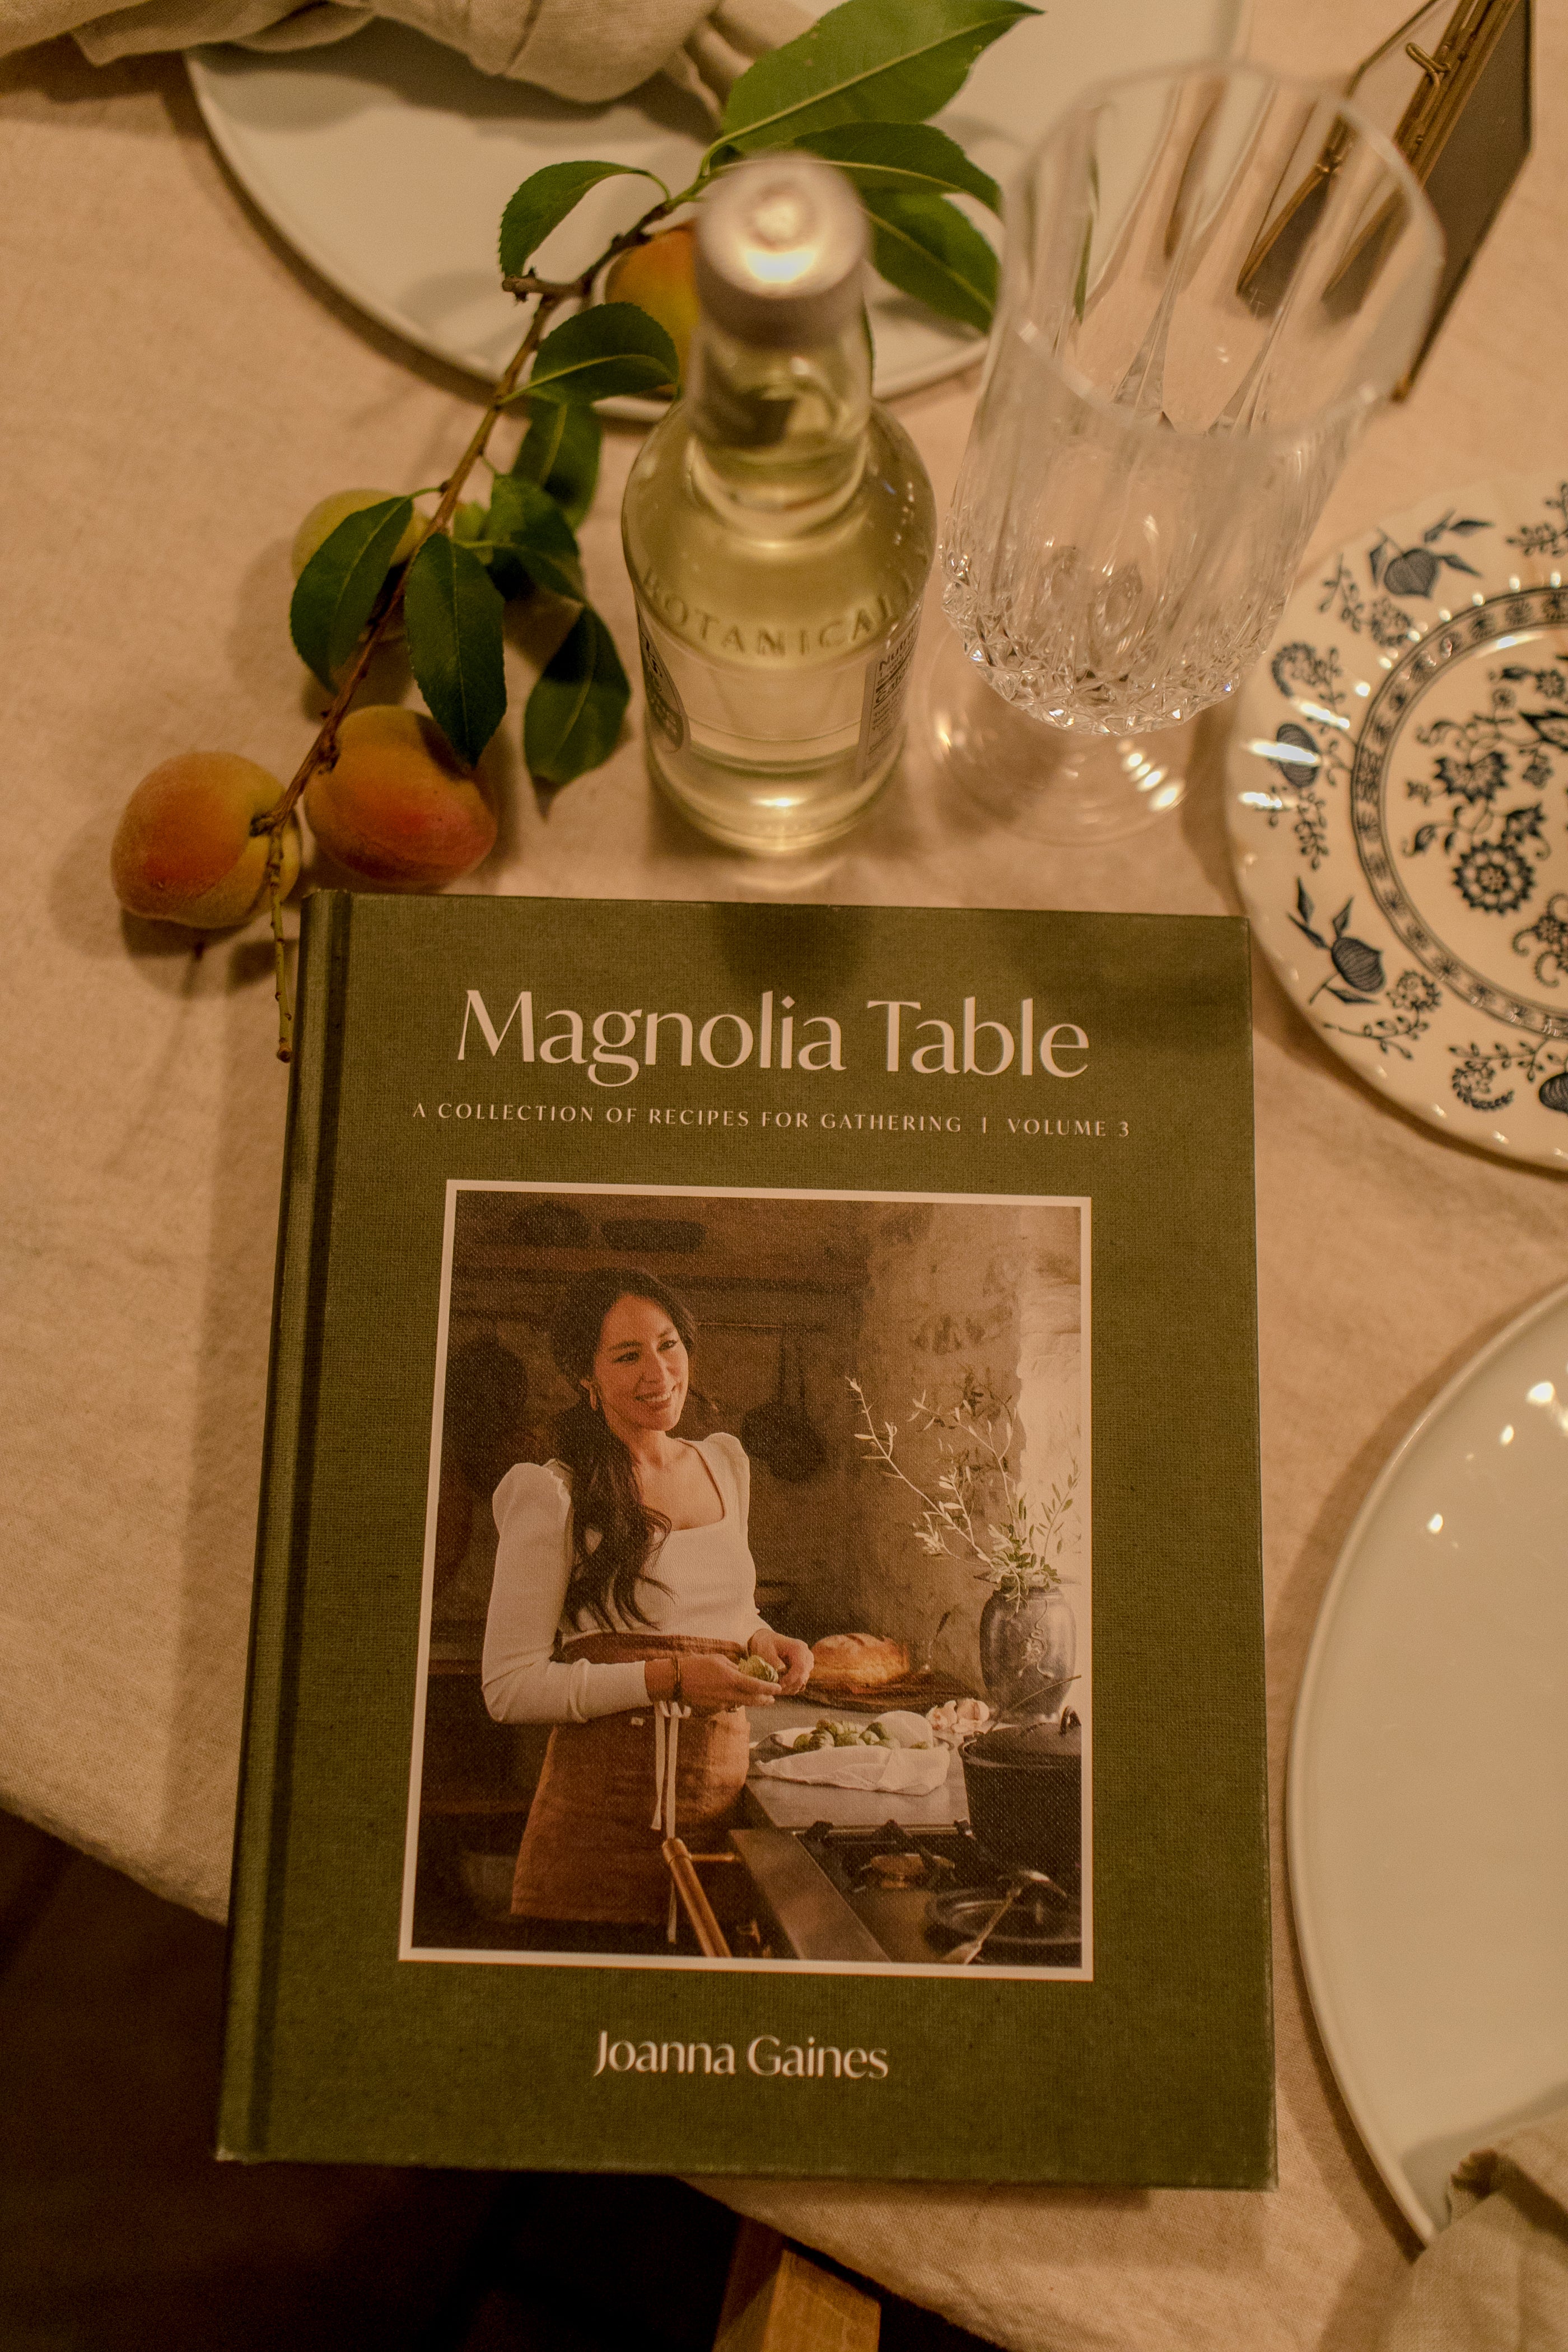 Image of the Magnolia Table Cookbook